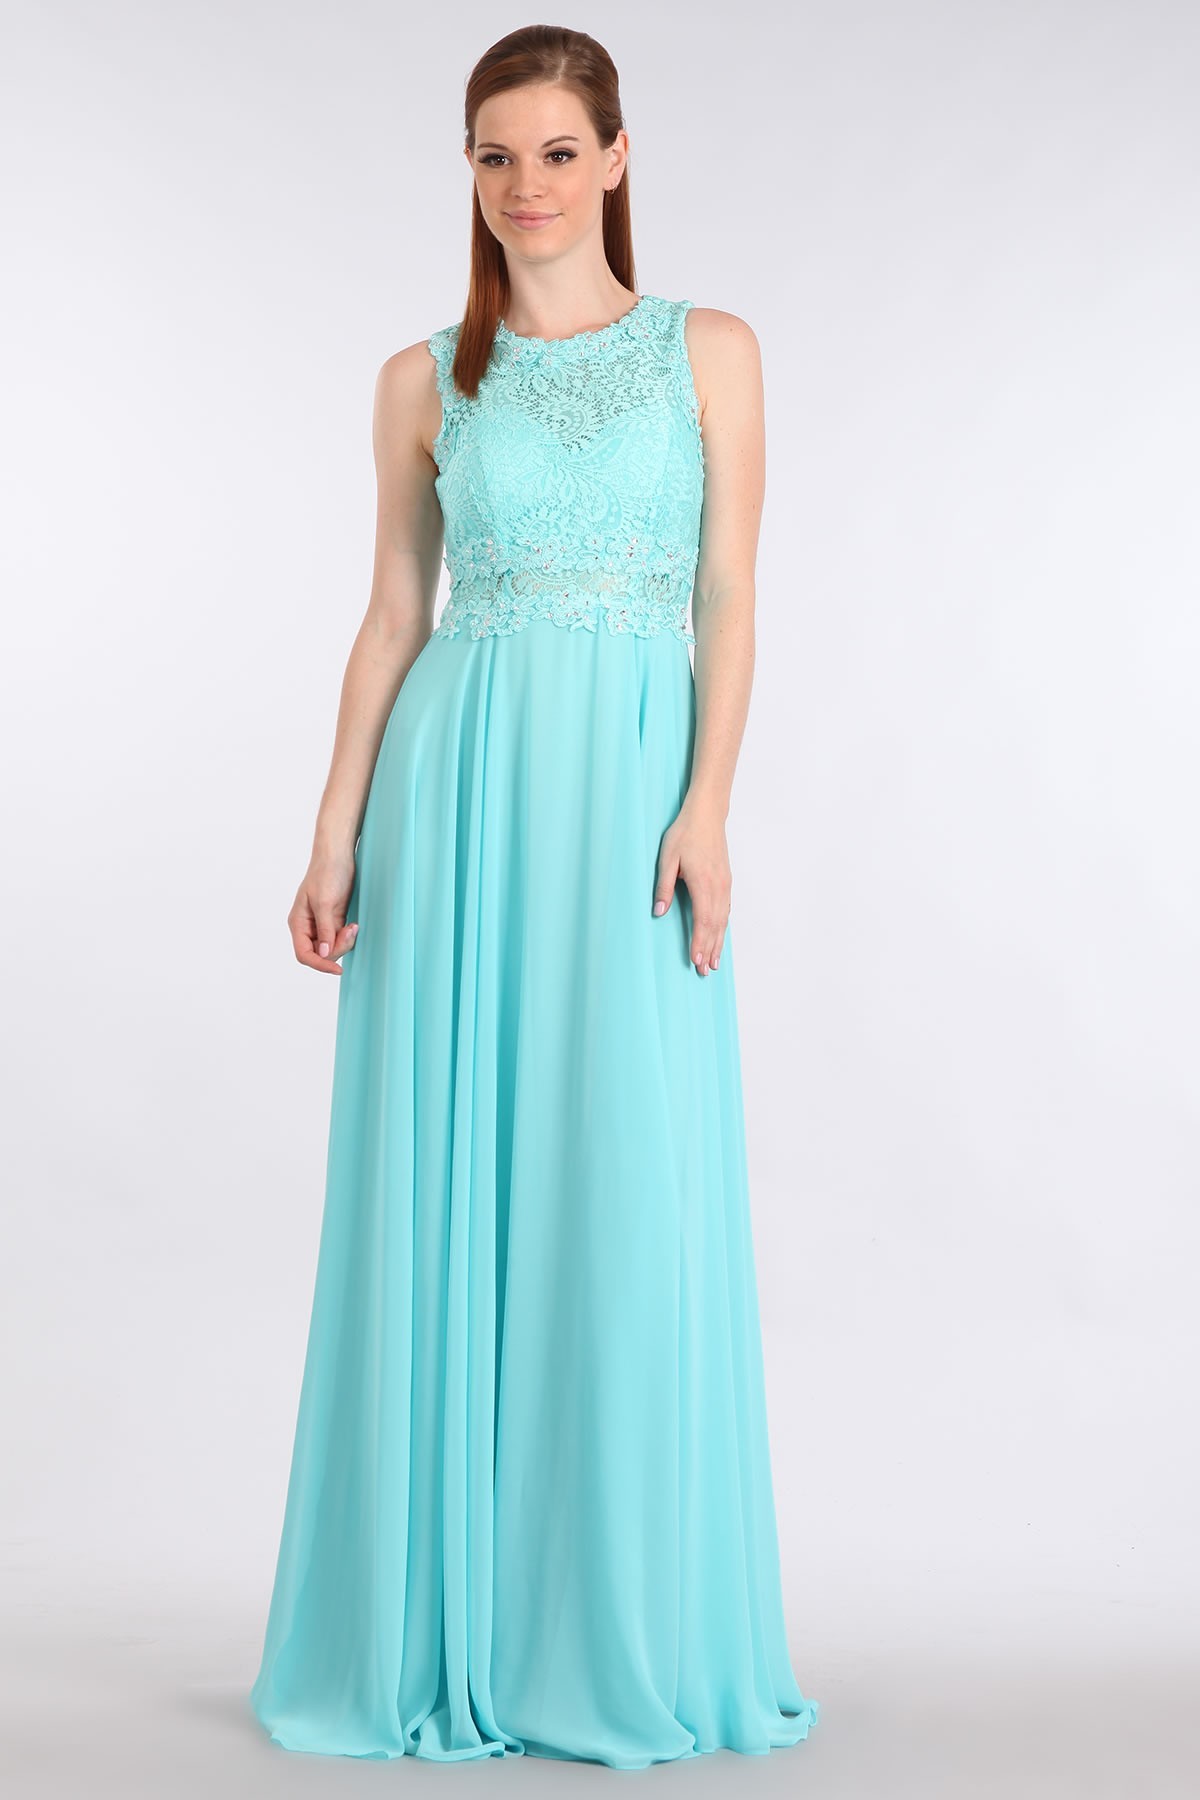 Fiesta Fashion > Evening Dresses > #9059 − LAShowroom.com